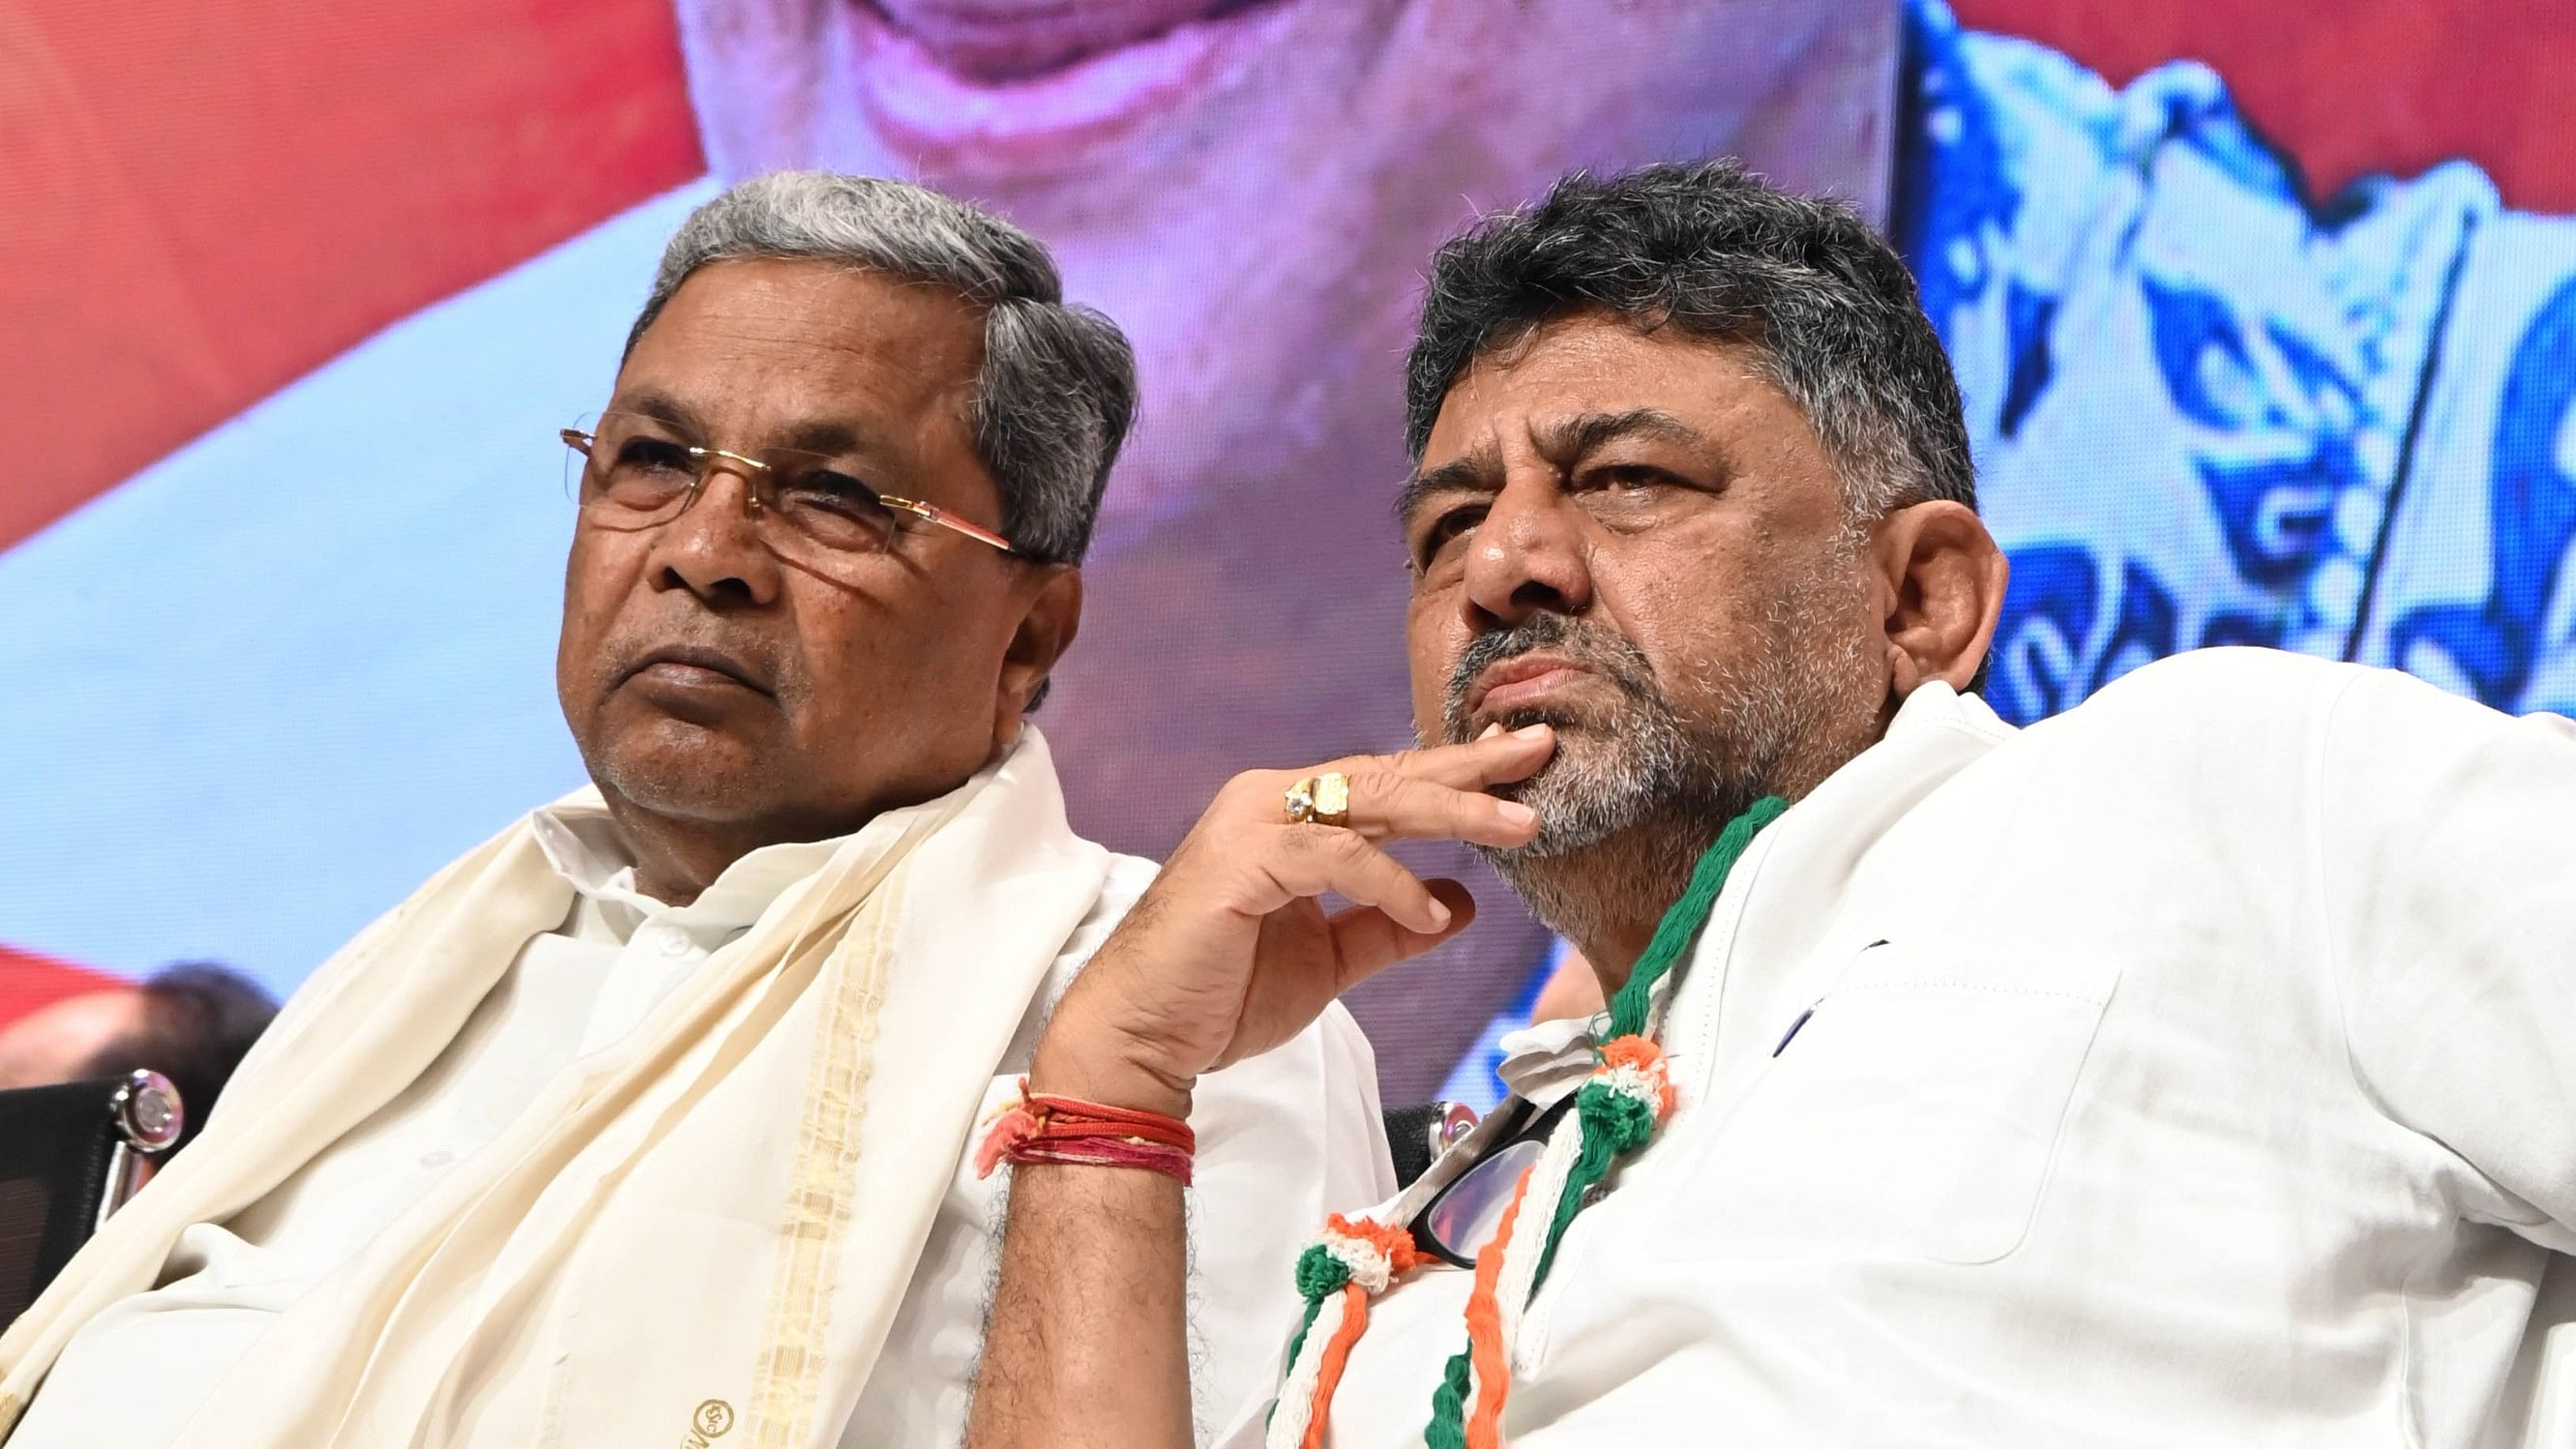 <div class="paragraphs"><p>Karnataka Chief Minister Siddaramaiah and his deputy D K Shivakumar.</p></div>